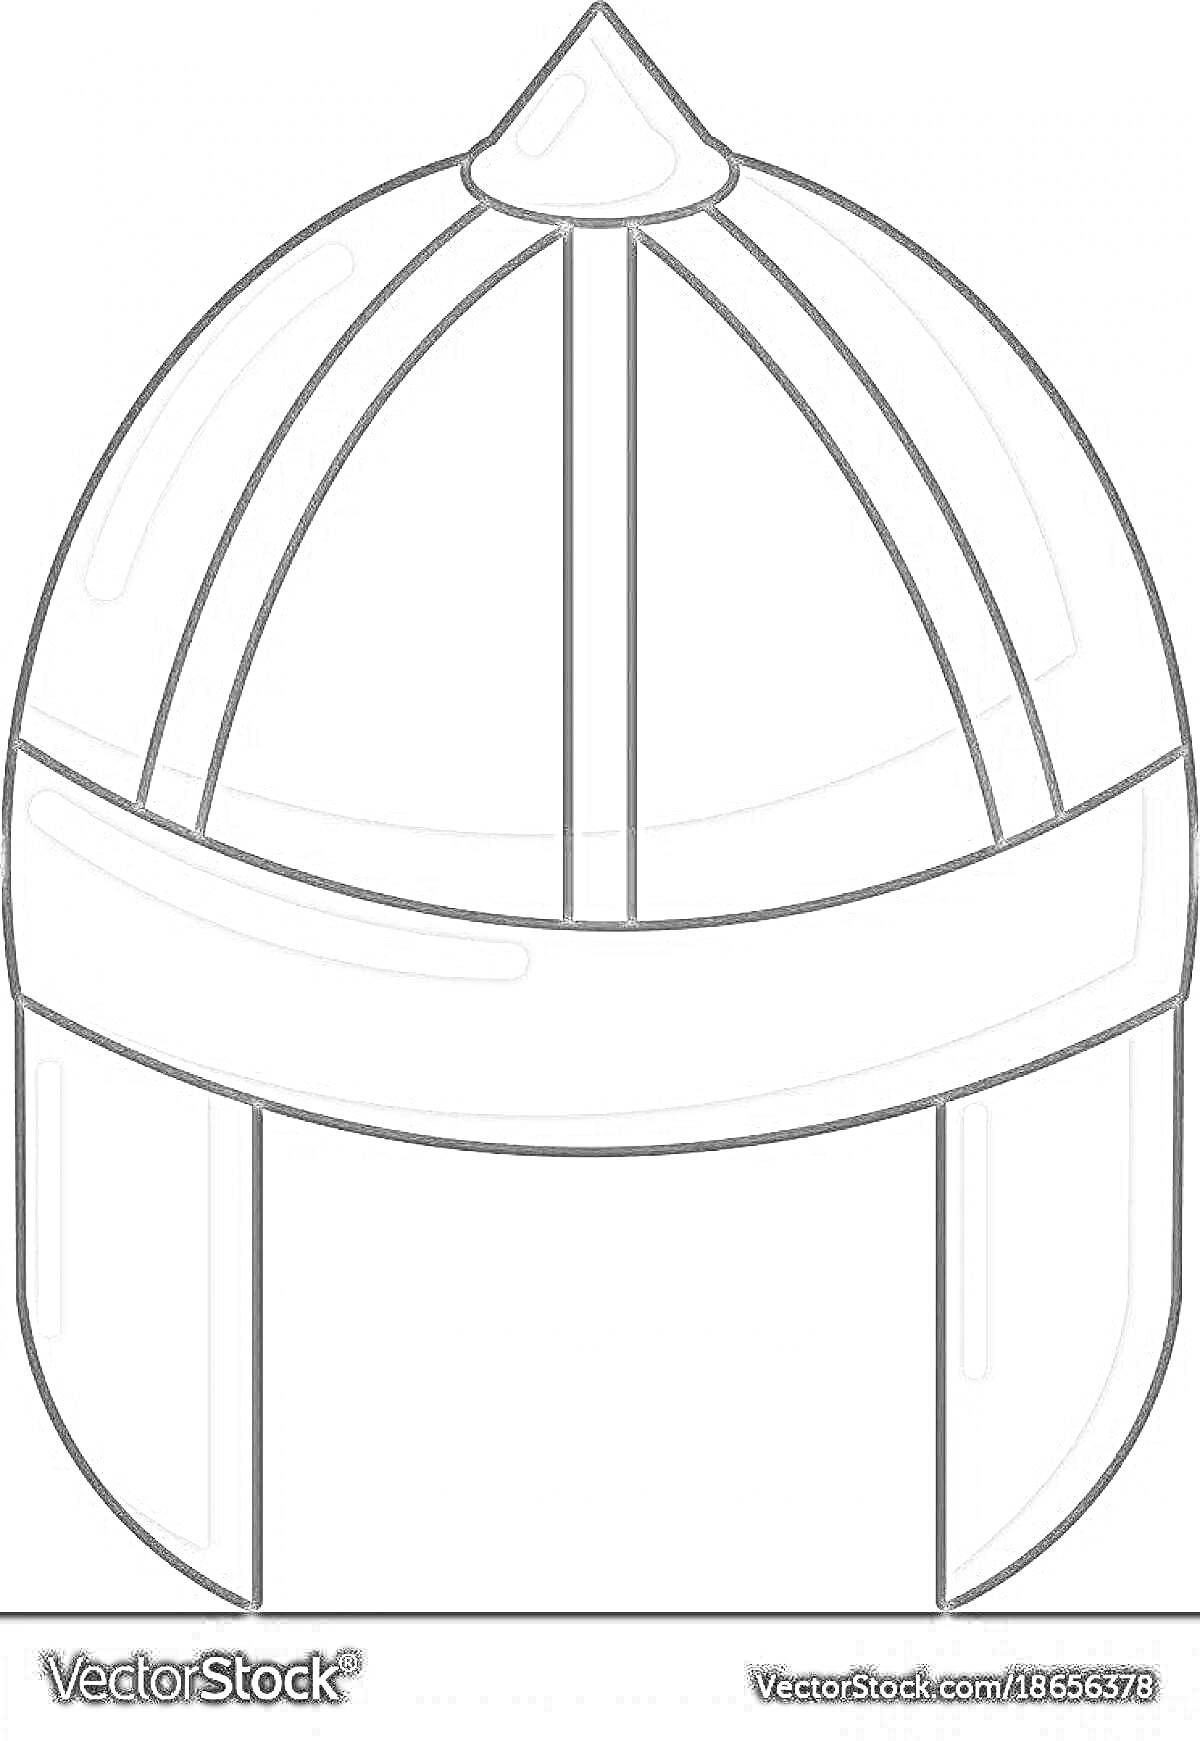 На раскраске изображено: Богатырь, Защитный шлем, Рыцарский шлем, Доспехи, Защита, Крыша, Латы